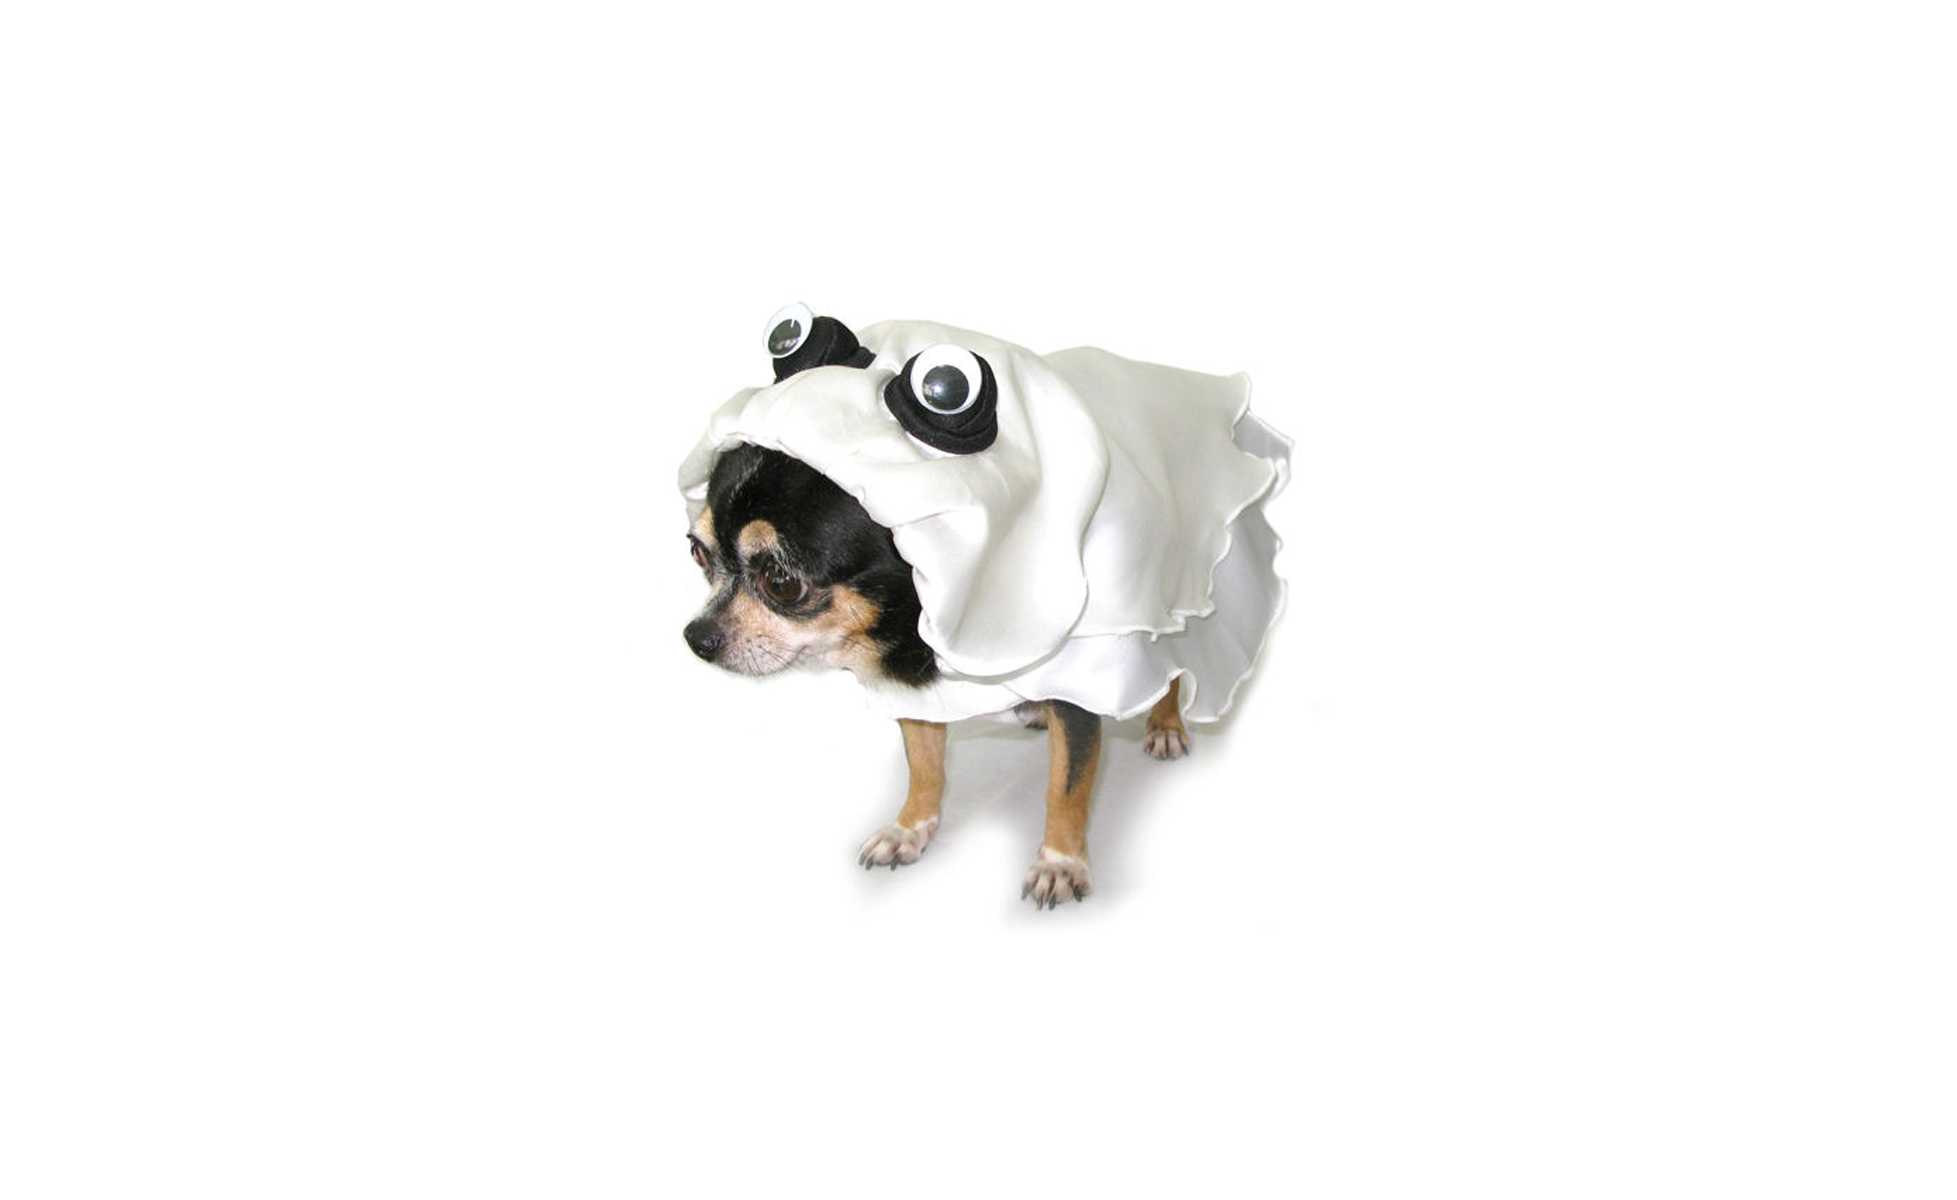   Ghost Dog Costume on Amazon  